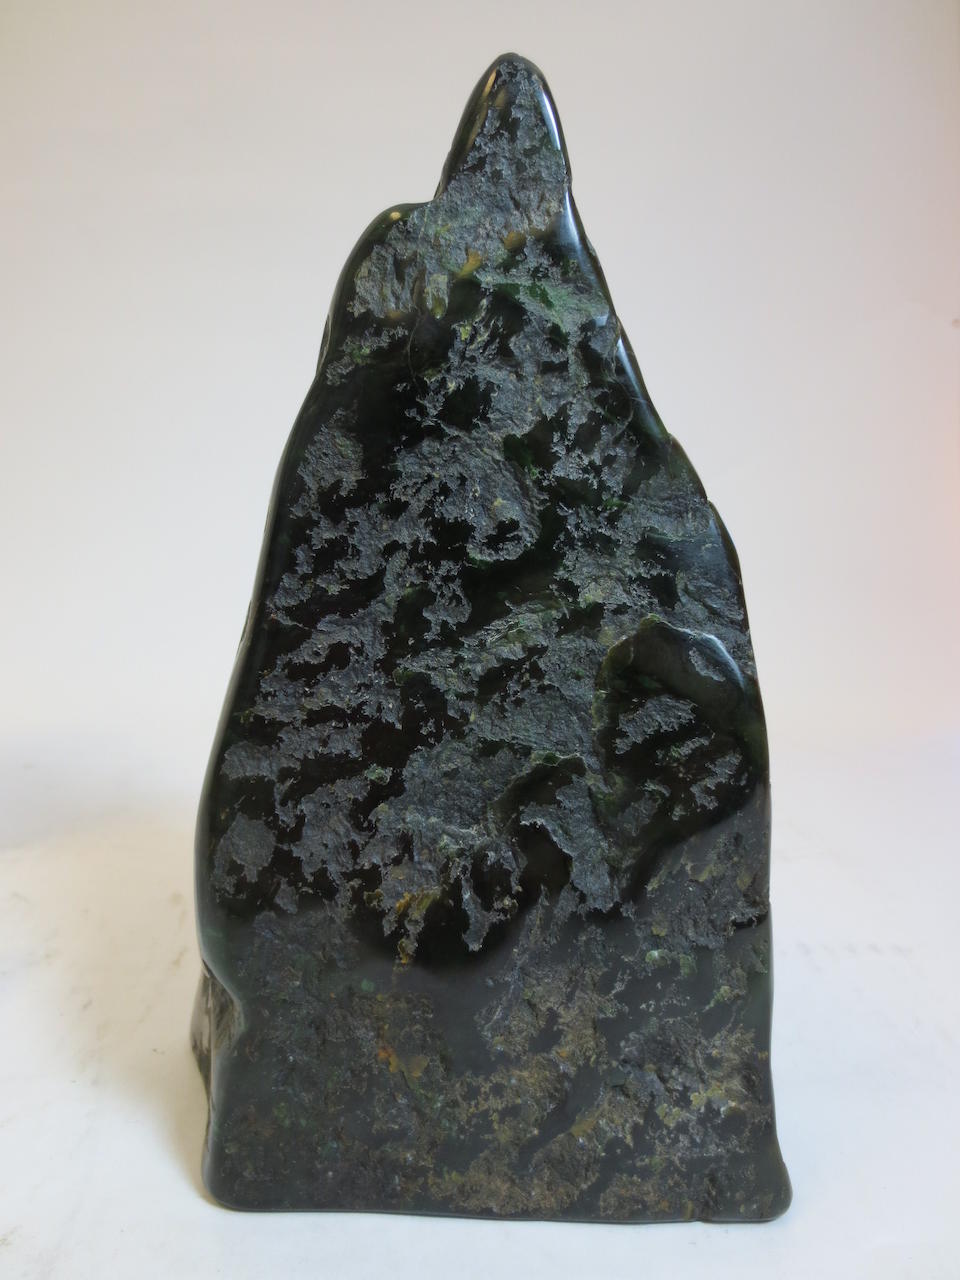 A chloromelanite scholar's rock, gongshi